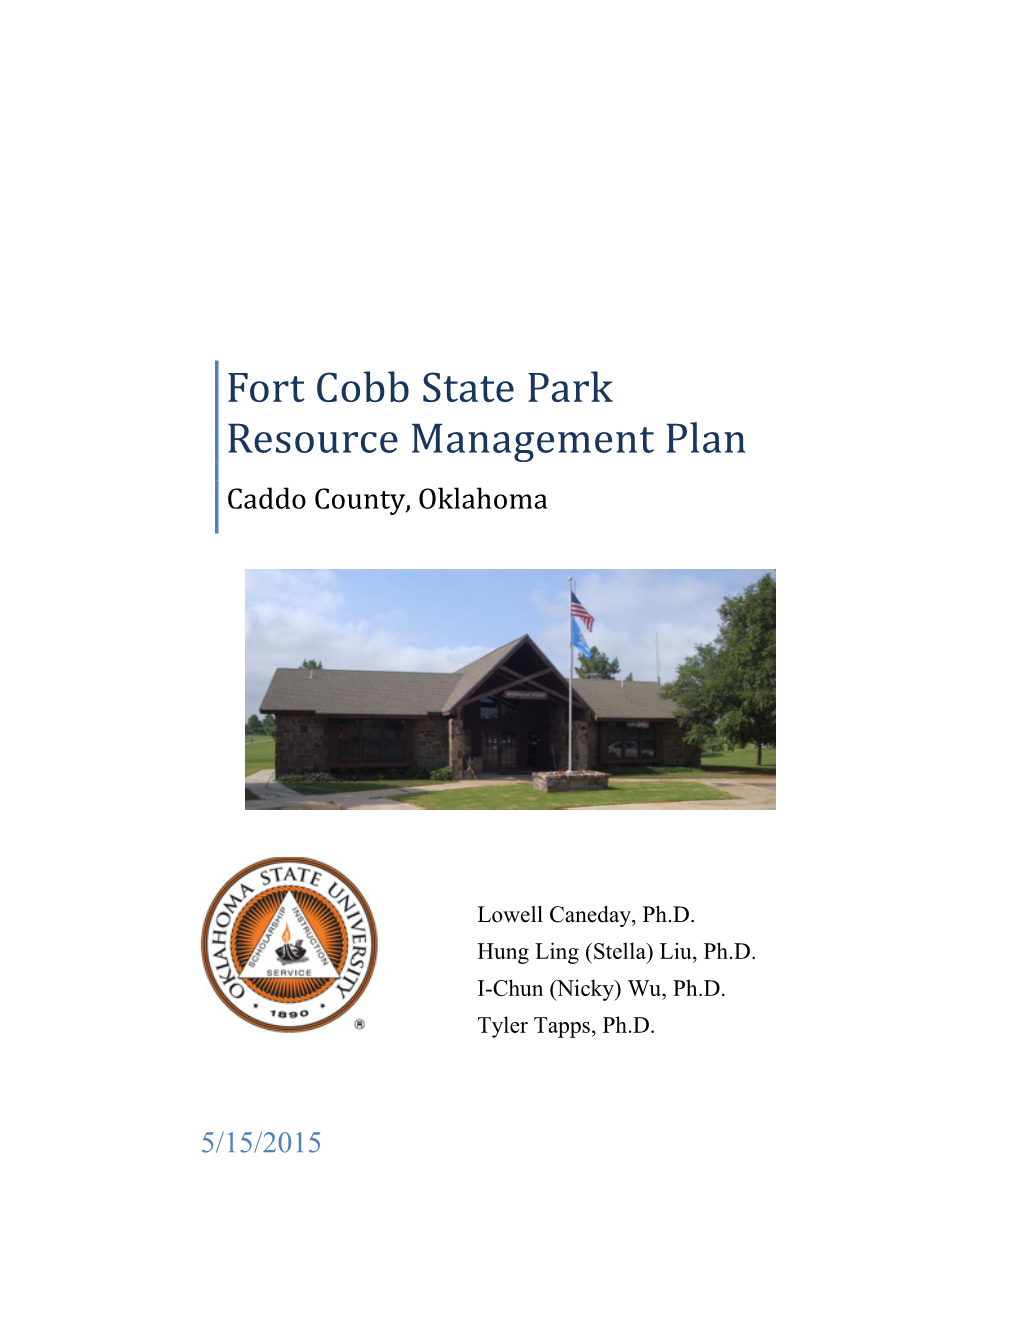 Fort Cobb State Park Resource Management Plan